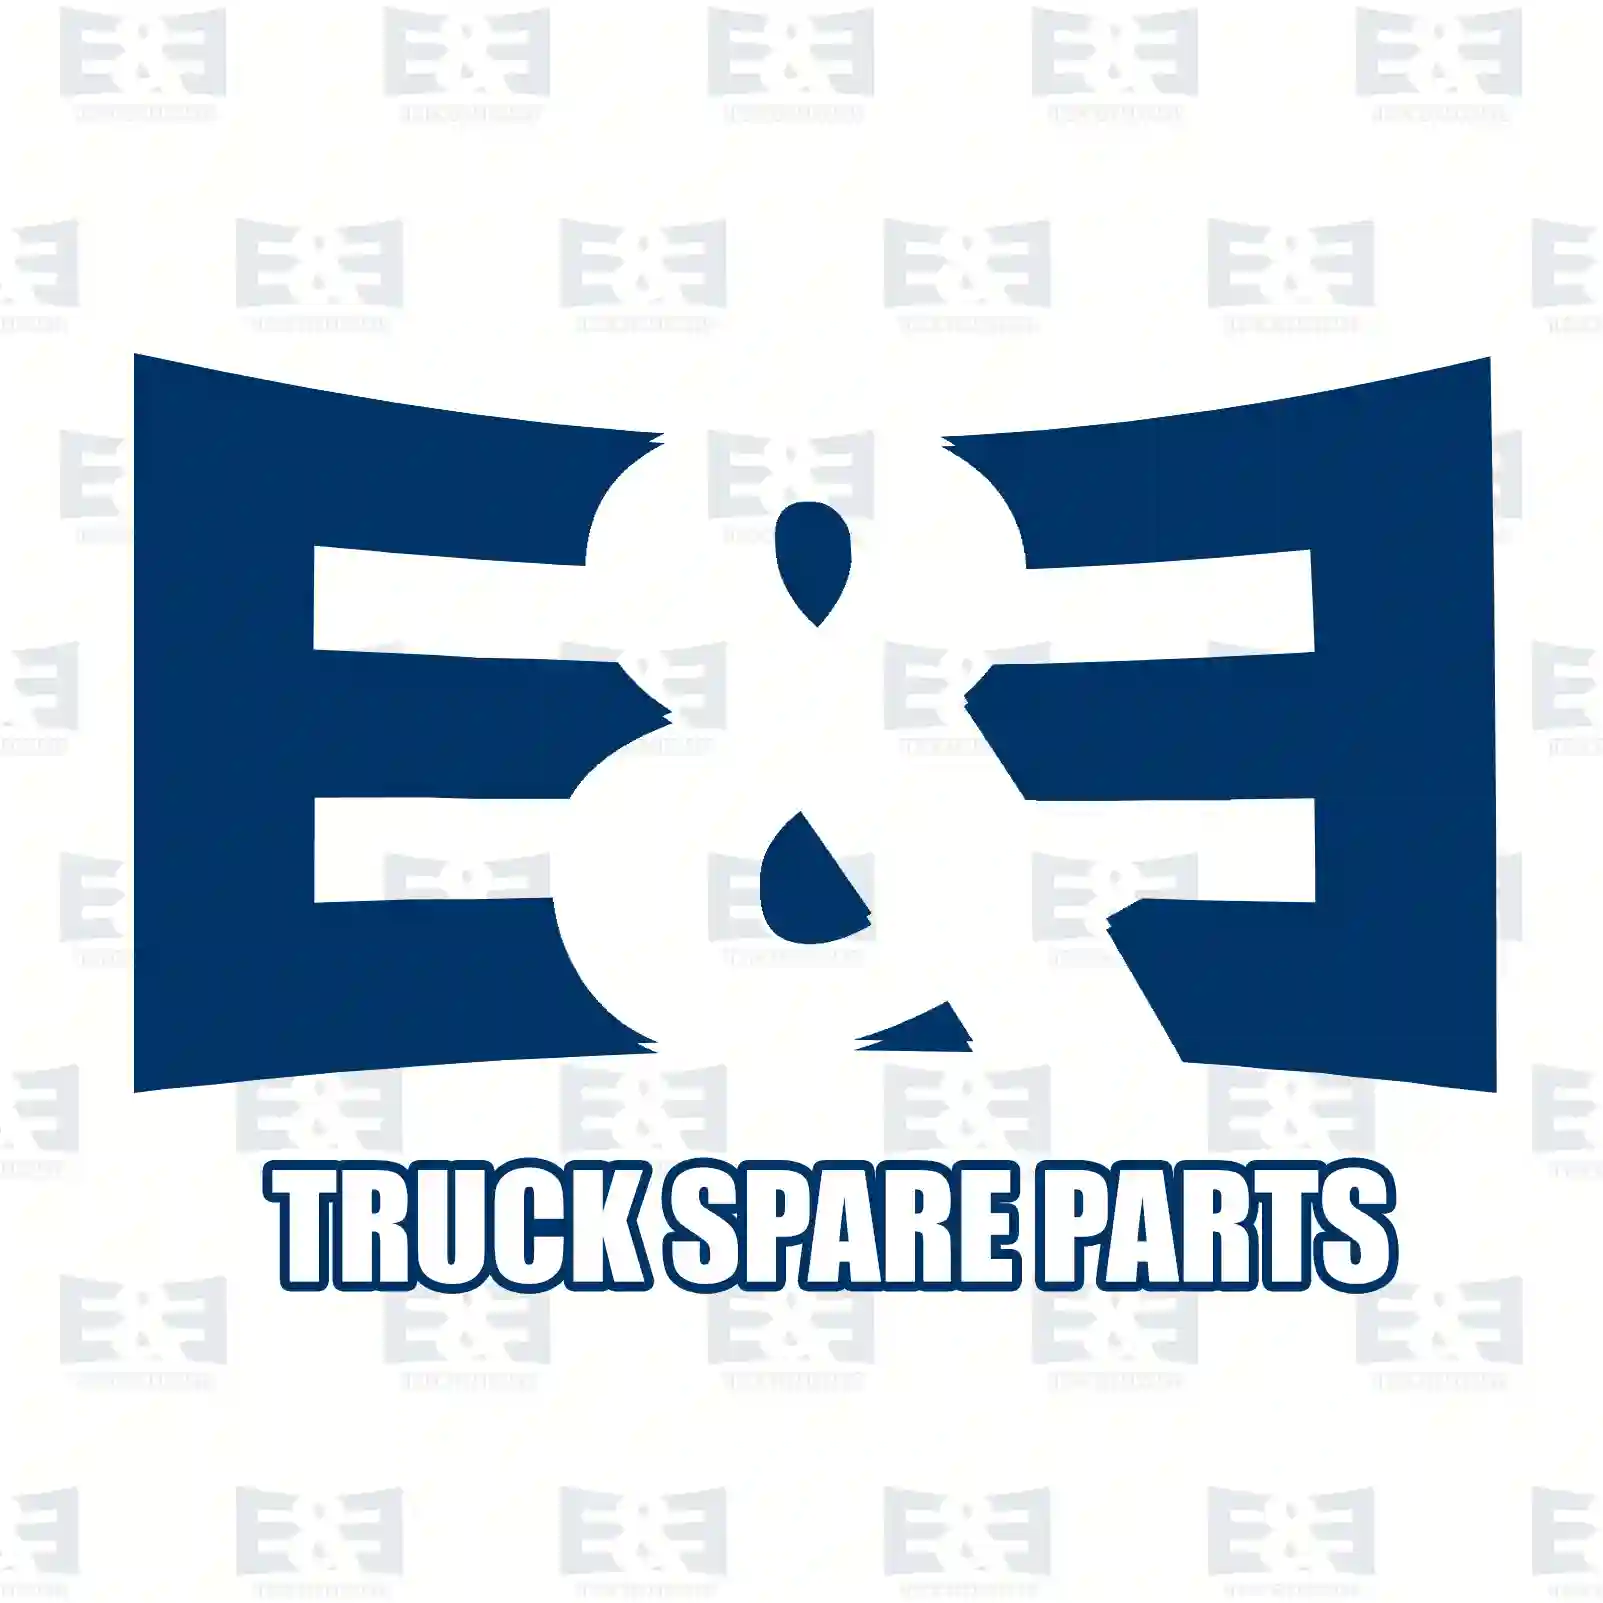 Input shaft, 2E2278799, 7403192293, 31922 ||  2E2278799 E&E Truck Spare Parts | Truck Spare Parts, Auotomotive Spare Parts Input shaft, 2E2278799, 7403192293, 31922 ||  2E2278799 E&E Truck Spare Parts | Truck Spare Parts, Auotomotive Spare Parts